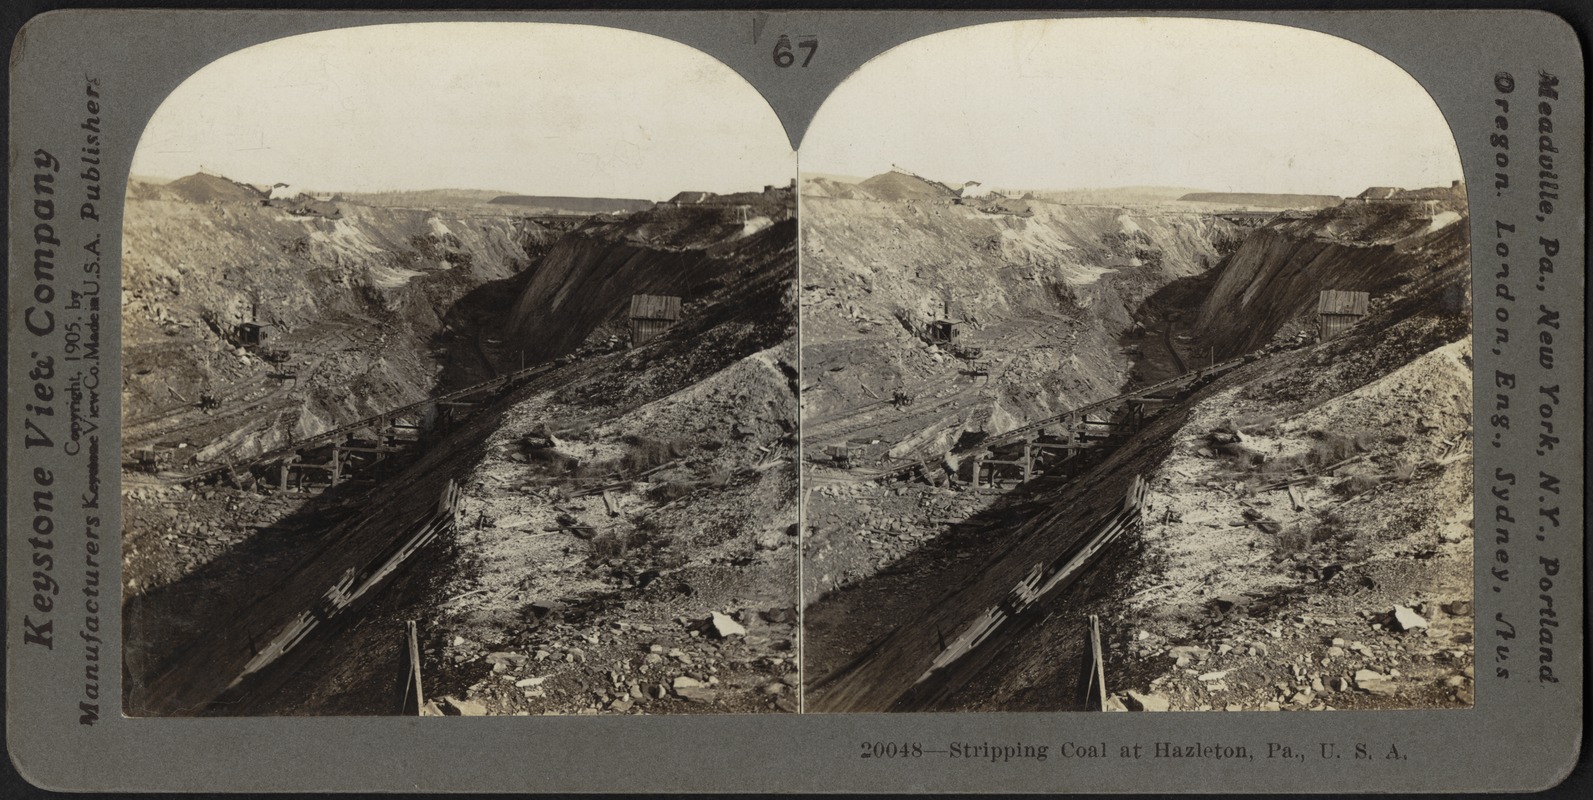 Stripping coal at Hazelton, Pennsylvania